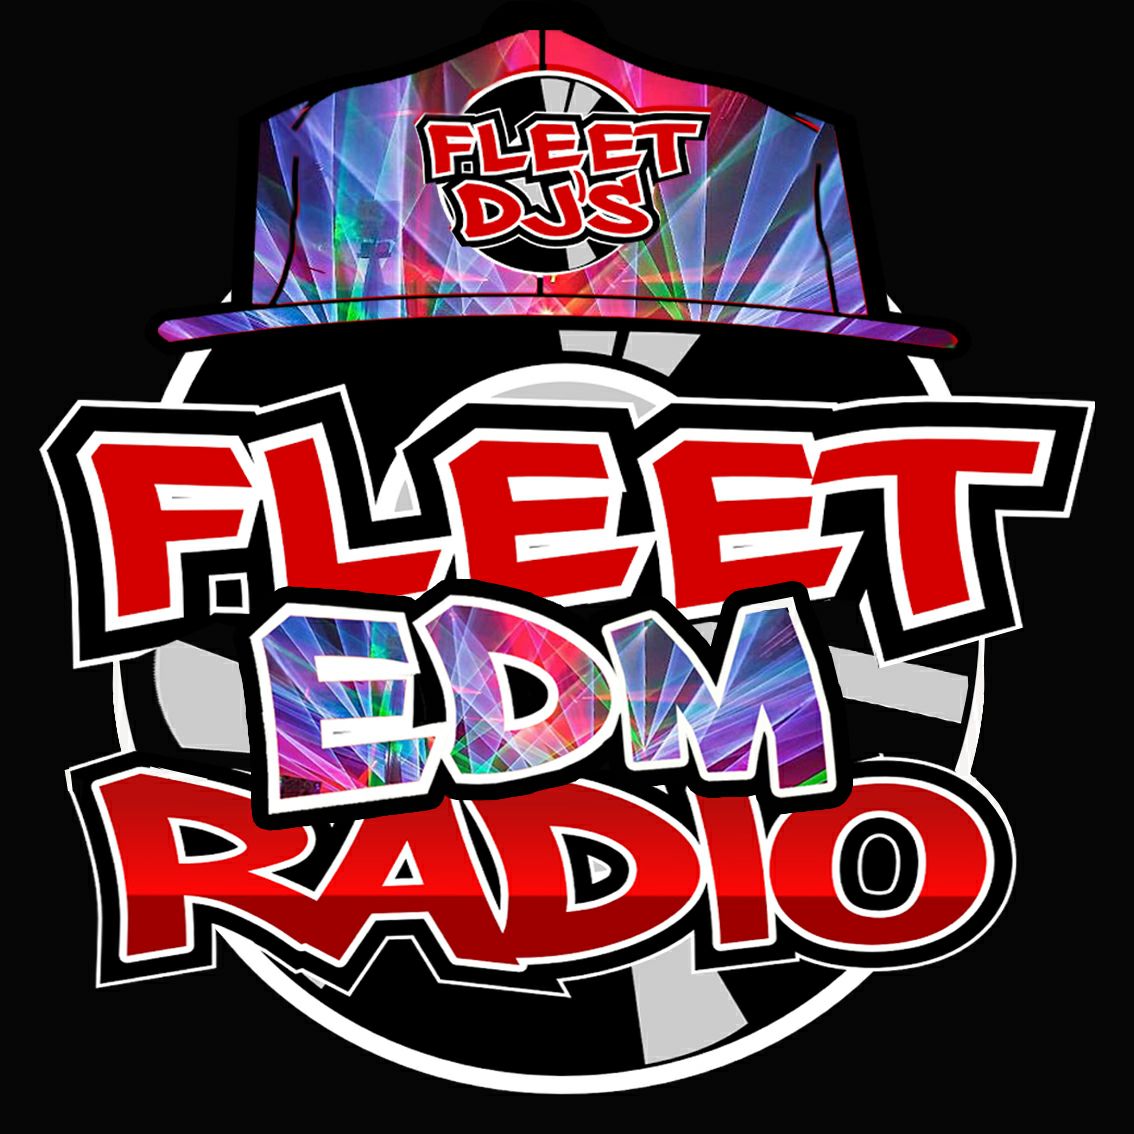 #NowPlaying @Djfmsparkz (EP49) #FleetEDMRadio #ReviveSessions @Fleetdjs @NJFleetdjs #ReviveProductions #Djfmsparkz (EP49) #FleetEDMRadio #ReviveSessions #Fleetdjs #NJFleetdjs #ReviveProductions #PlayingNow on WFER fleetedmradio.com “Where The Beat Begins!”